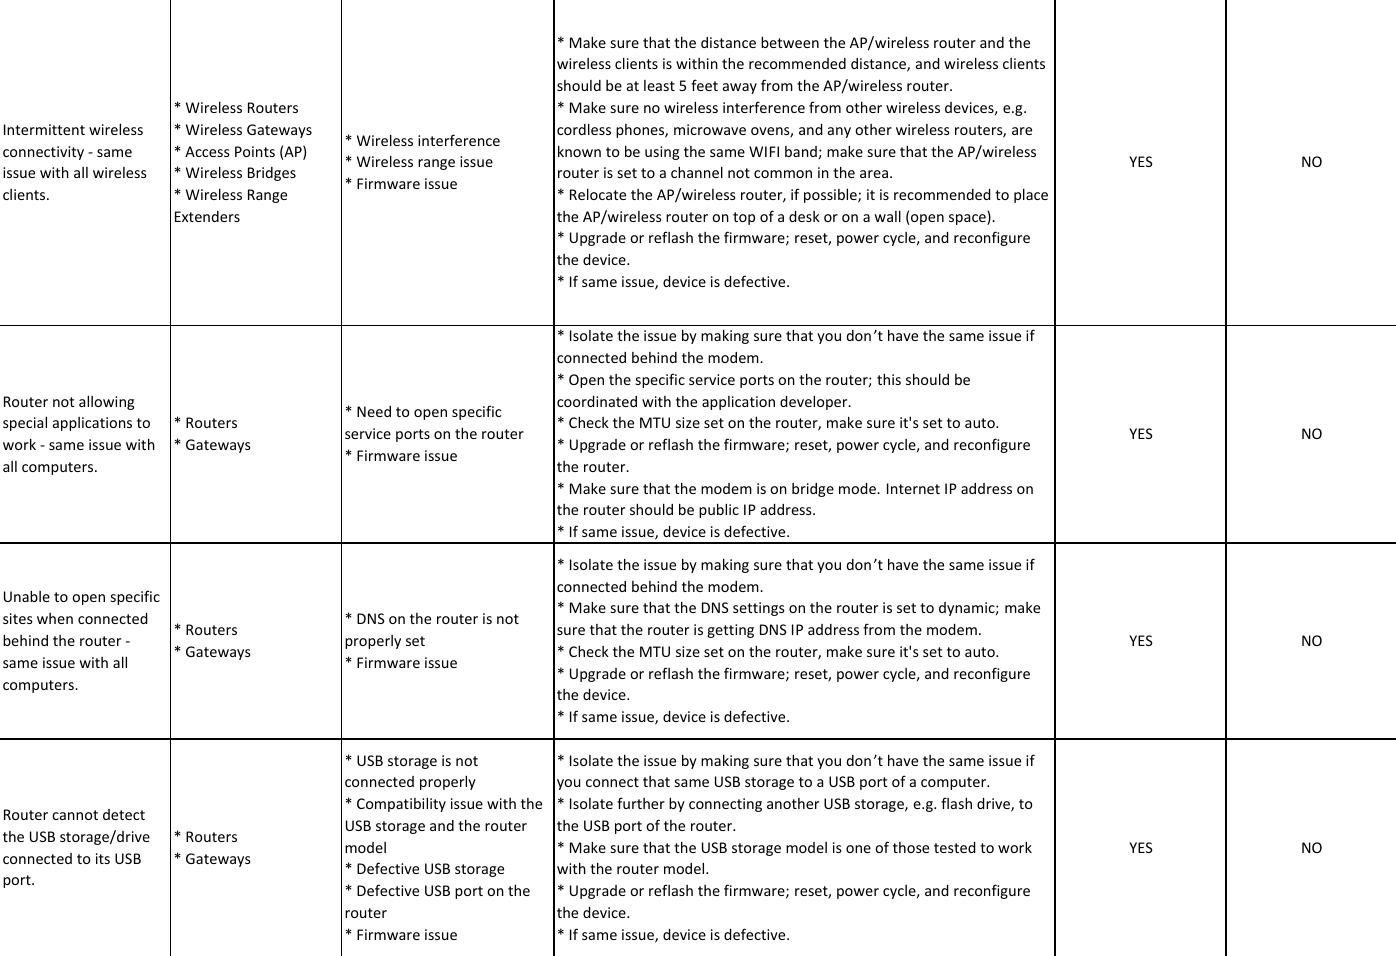 Page 10 of 11 - LInksys RMA Checklistx  22. L1 Checklist